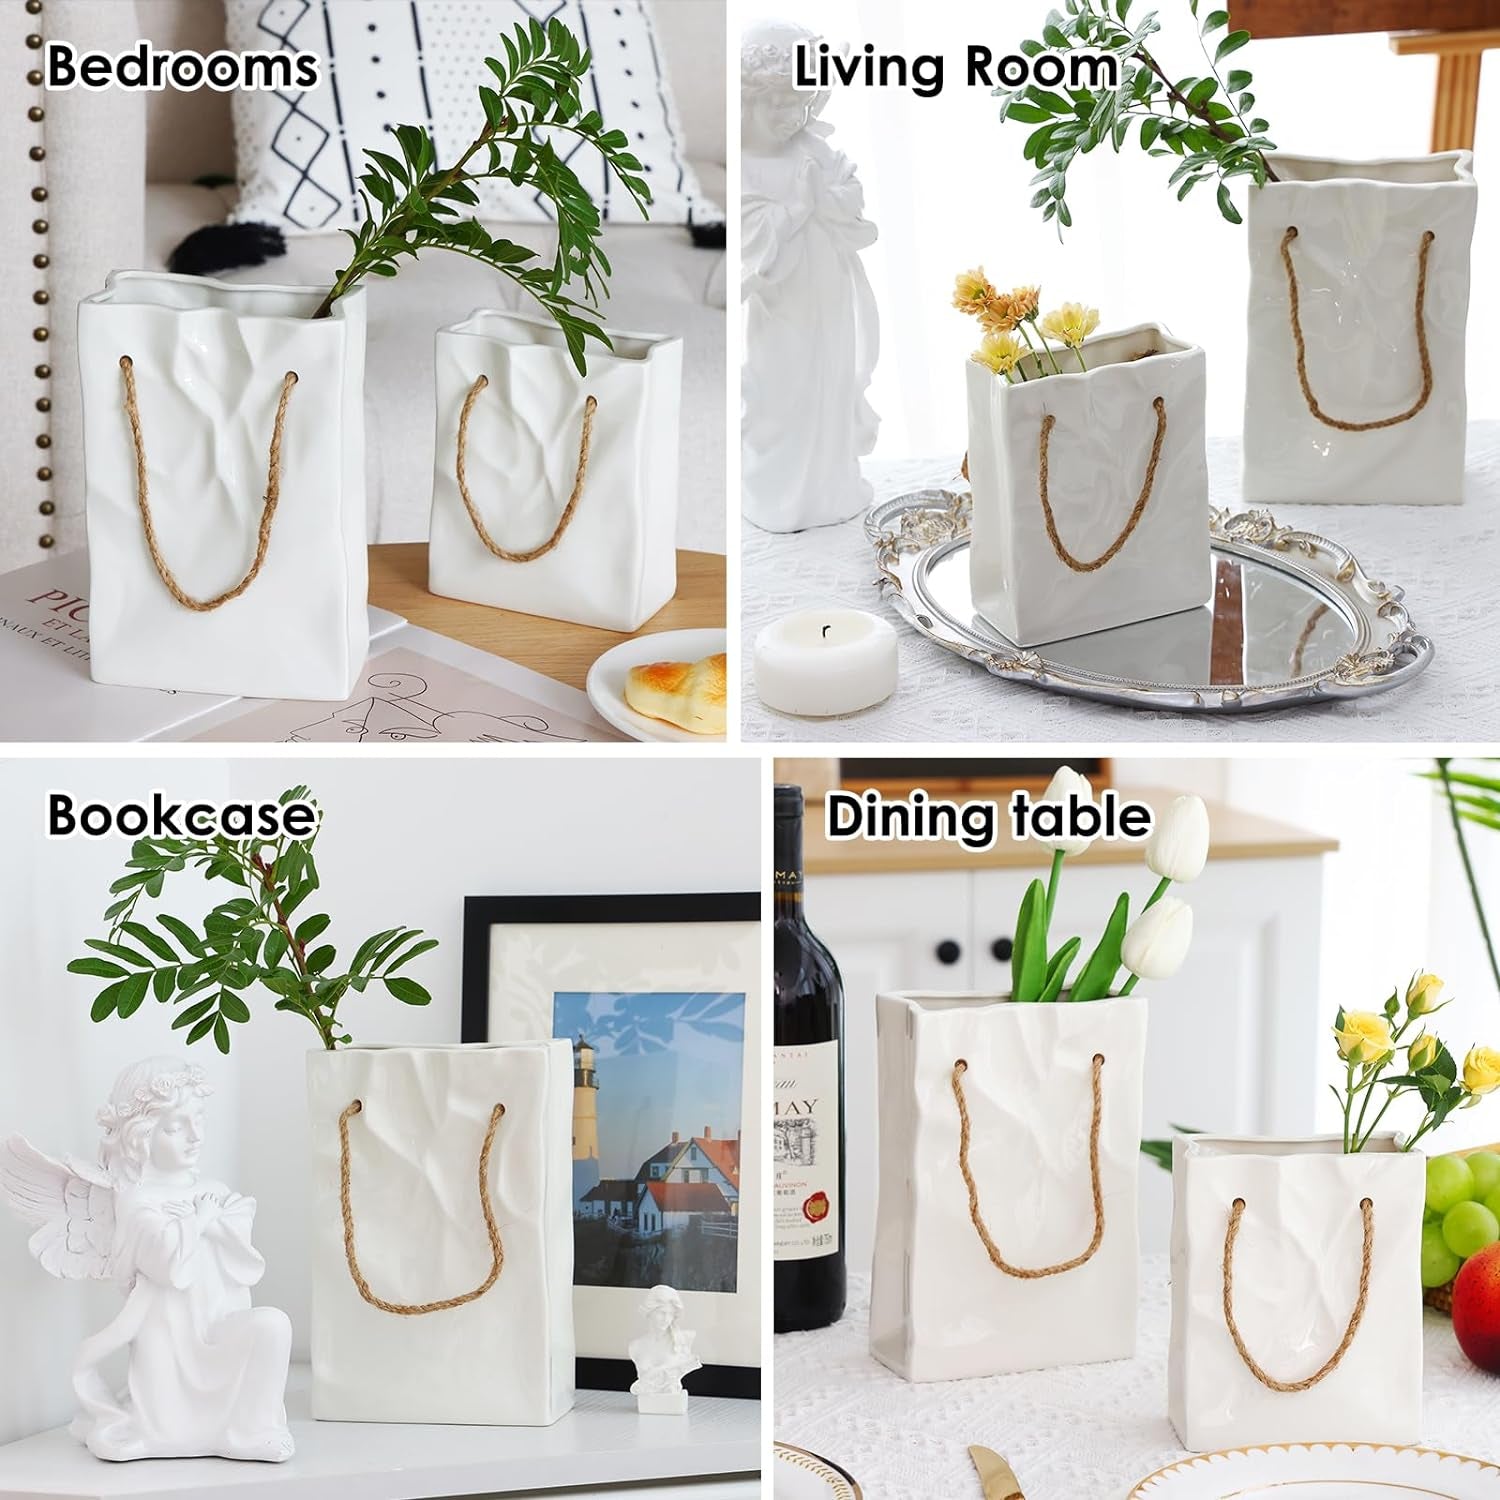 Paper Bag Vase White Ceramic Vase Irregular Paper Bag Shape Set of 2 Home Decoration Aesthetics Vase for Wedding Dinner Table and Bedroom